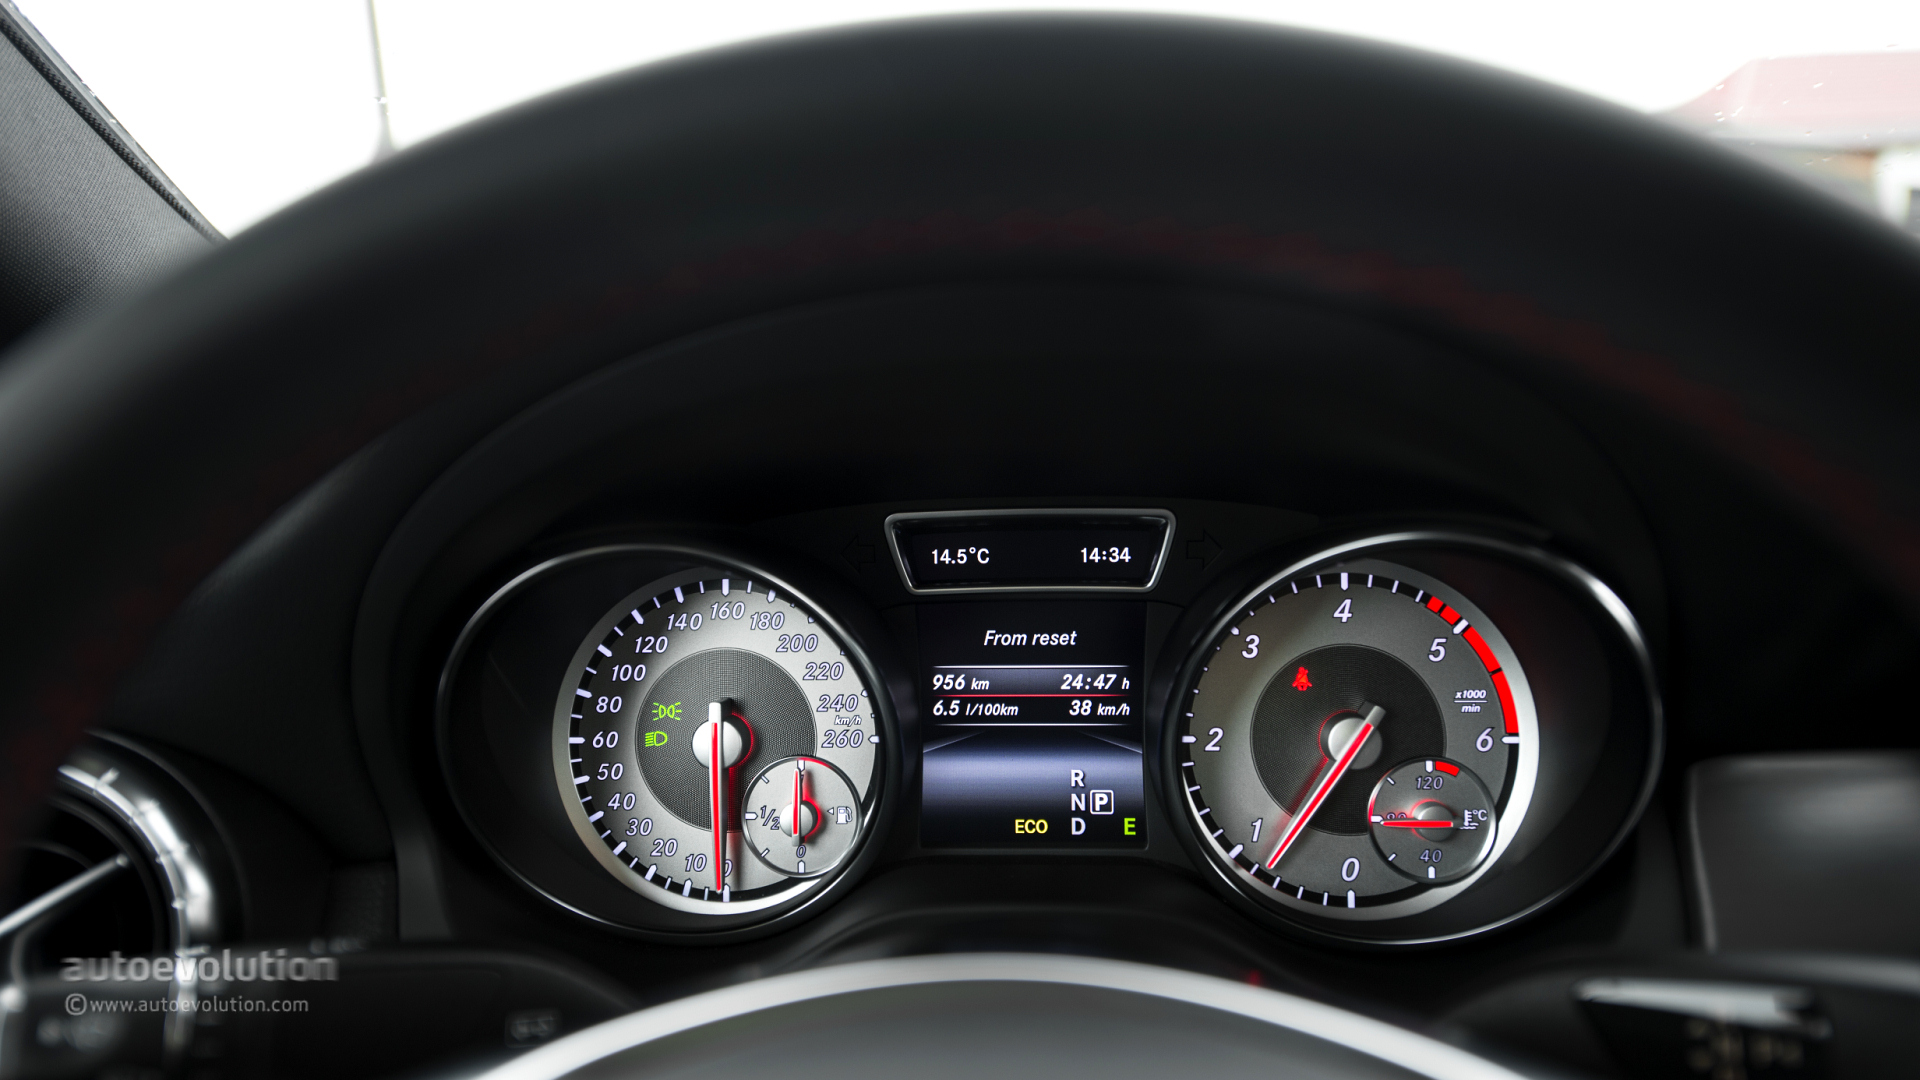 2014 Mercedes Benz Cla 200 Cdi First Drive Autoevolution